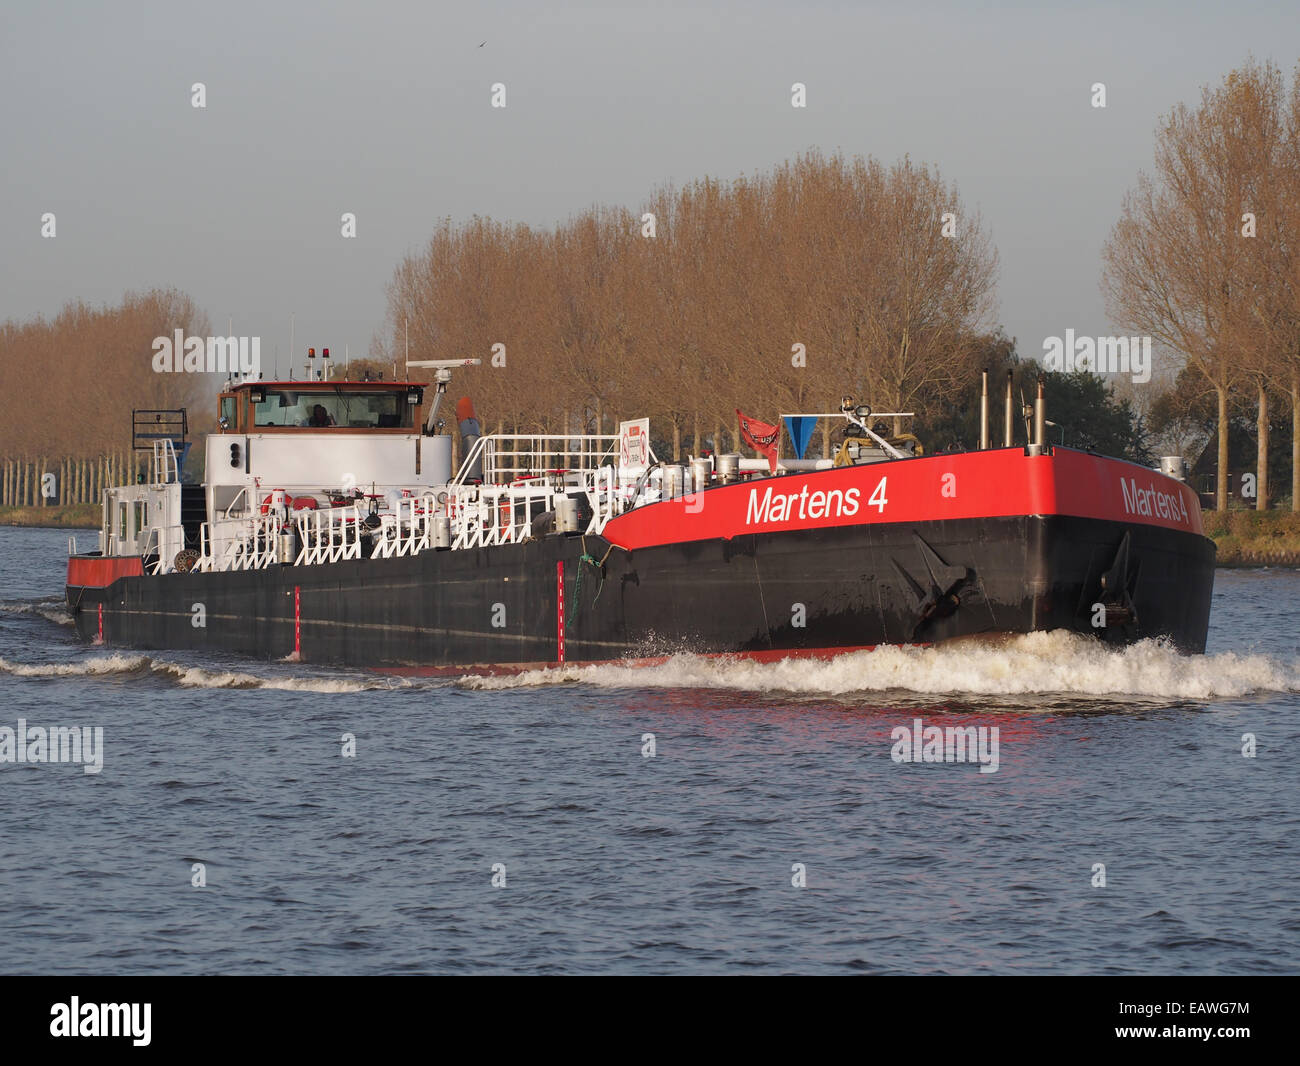 Martens 4 (ENI 02323039) all'Amsterdam-Rhine Canal, pic1 Foto Stock